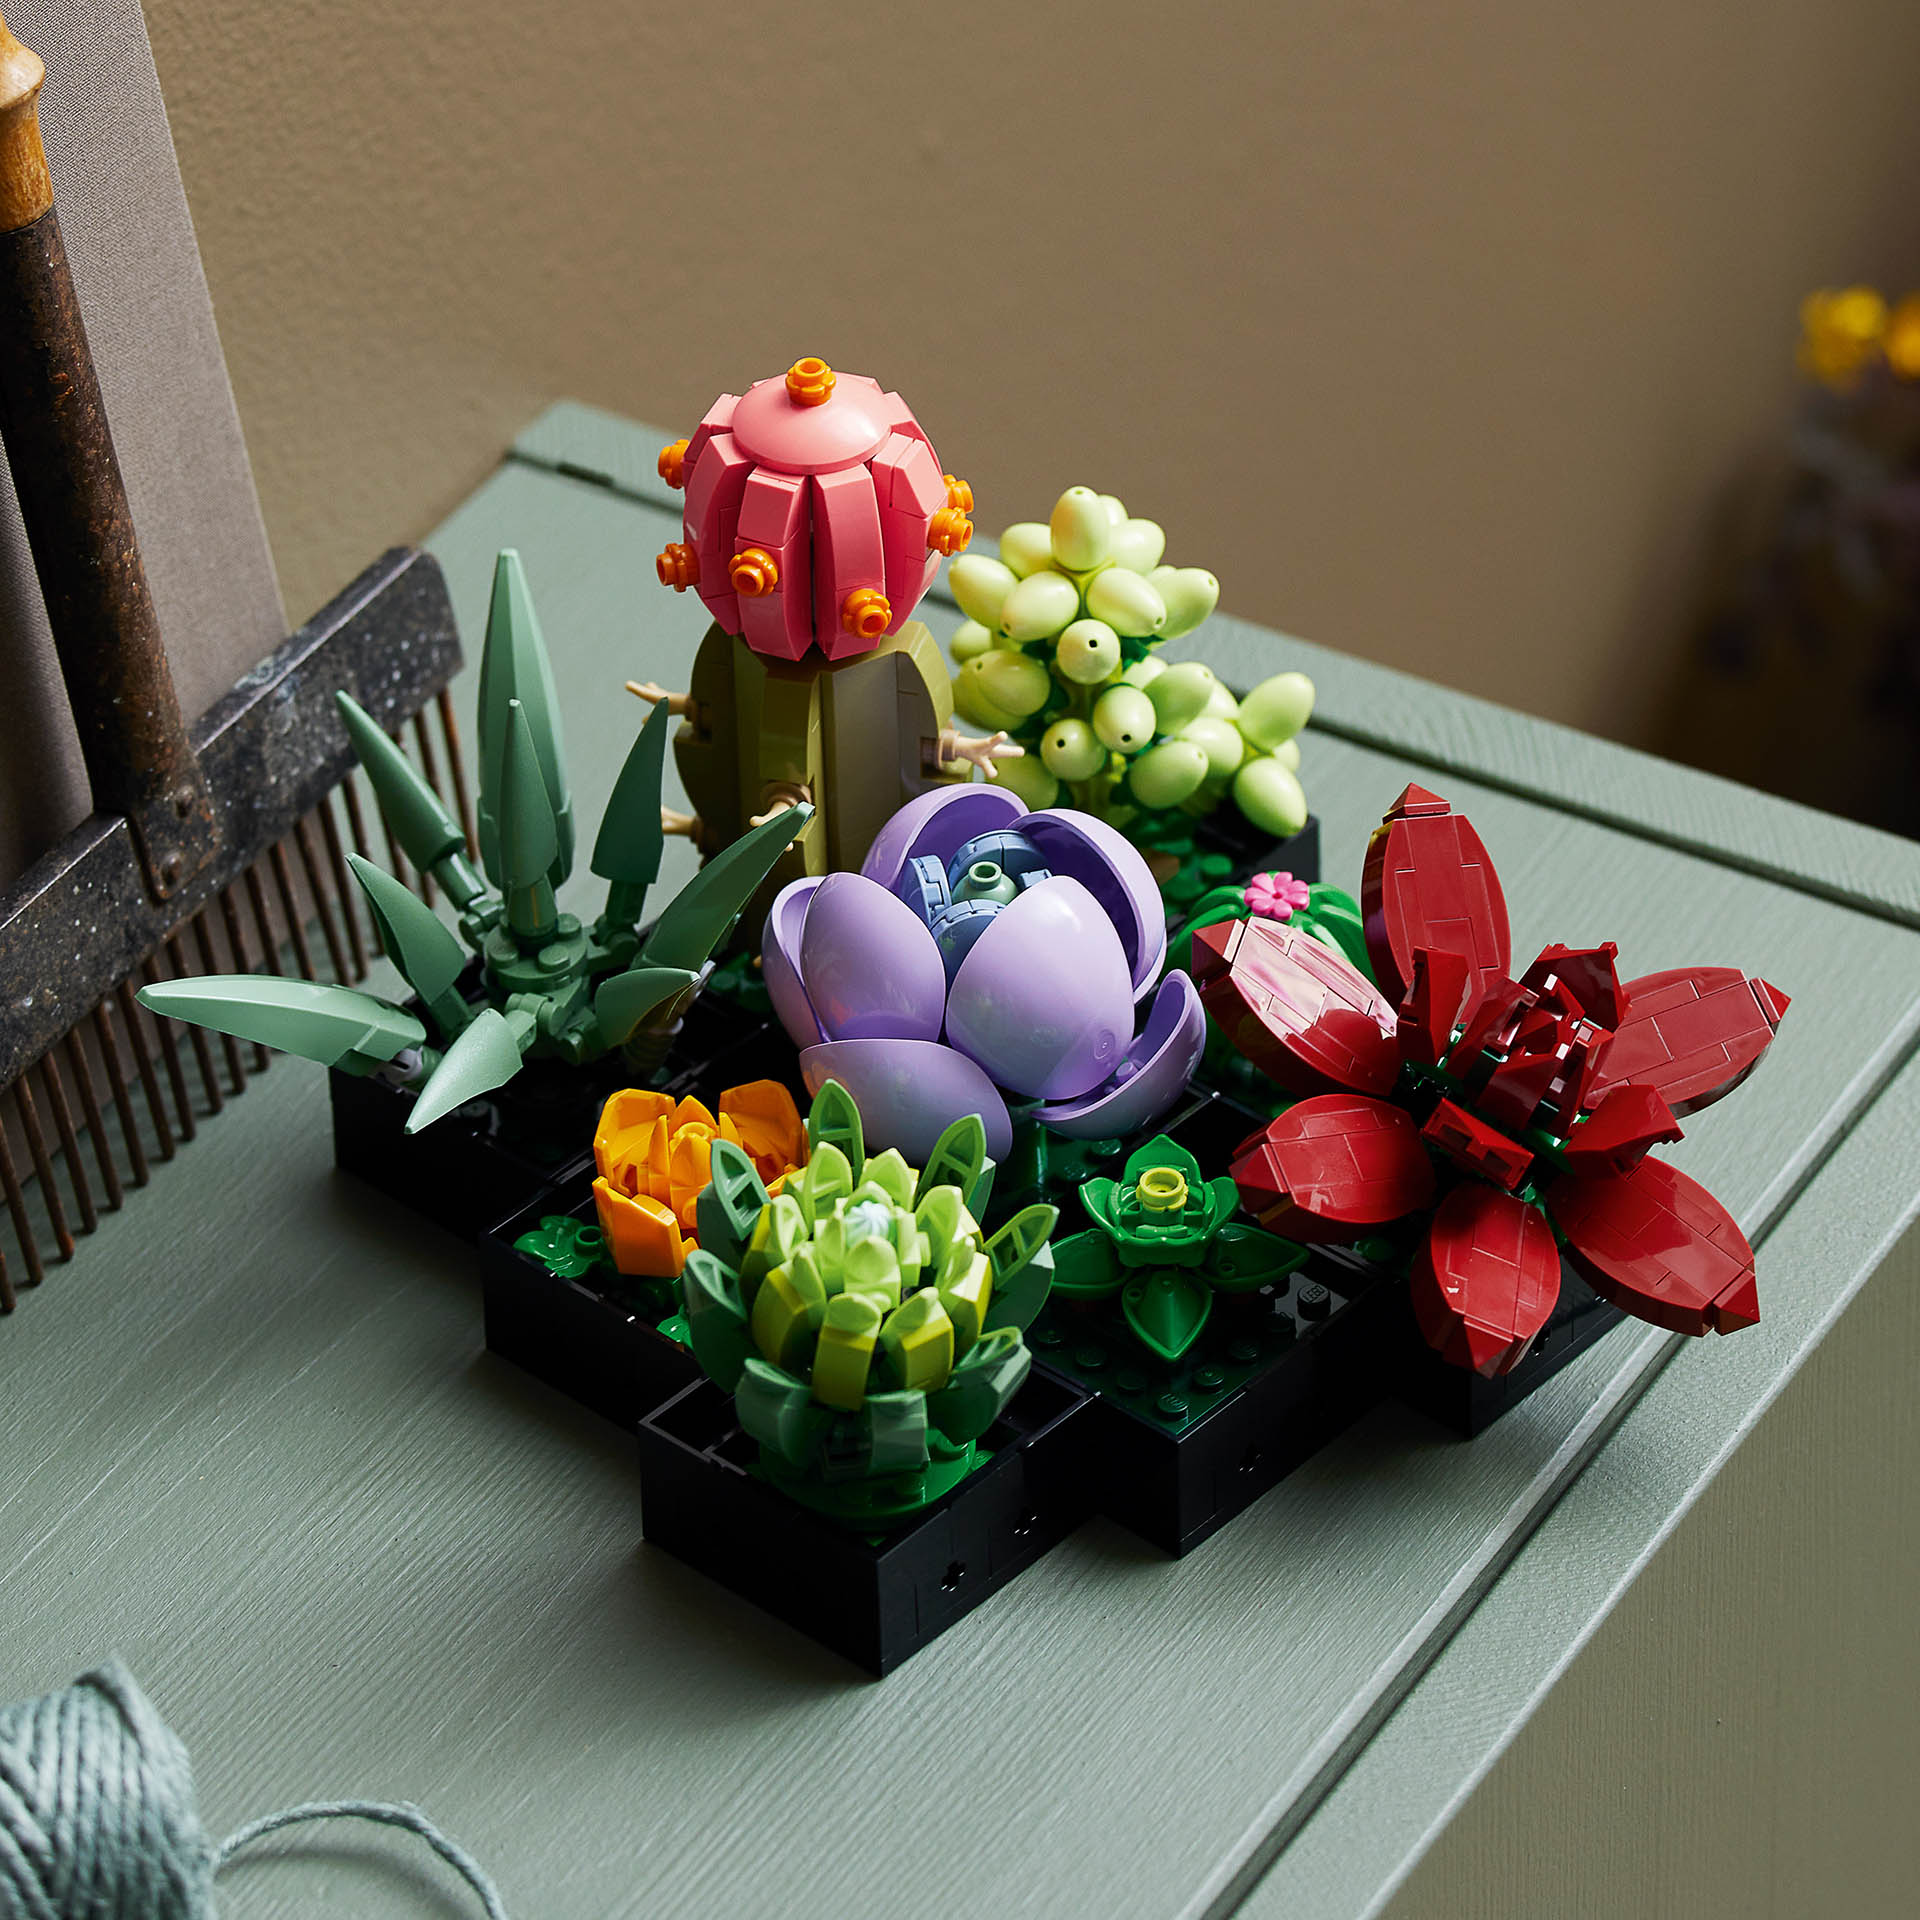 Stop Murdering Houseplants. Try Lego Flowers Instead.